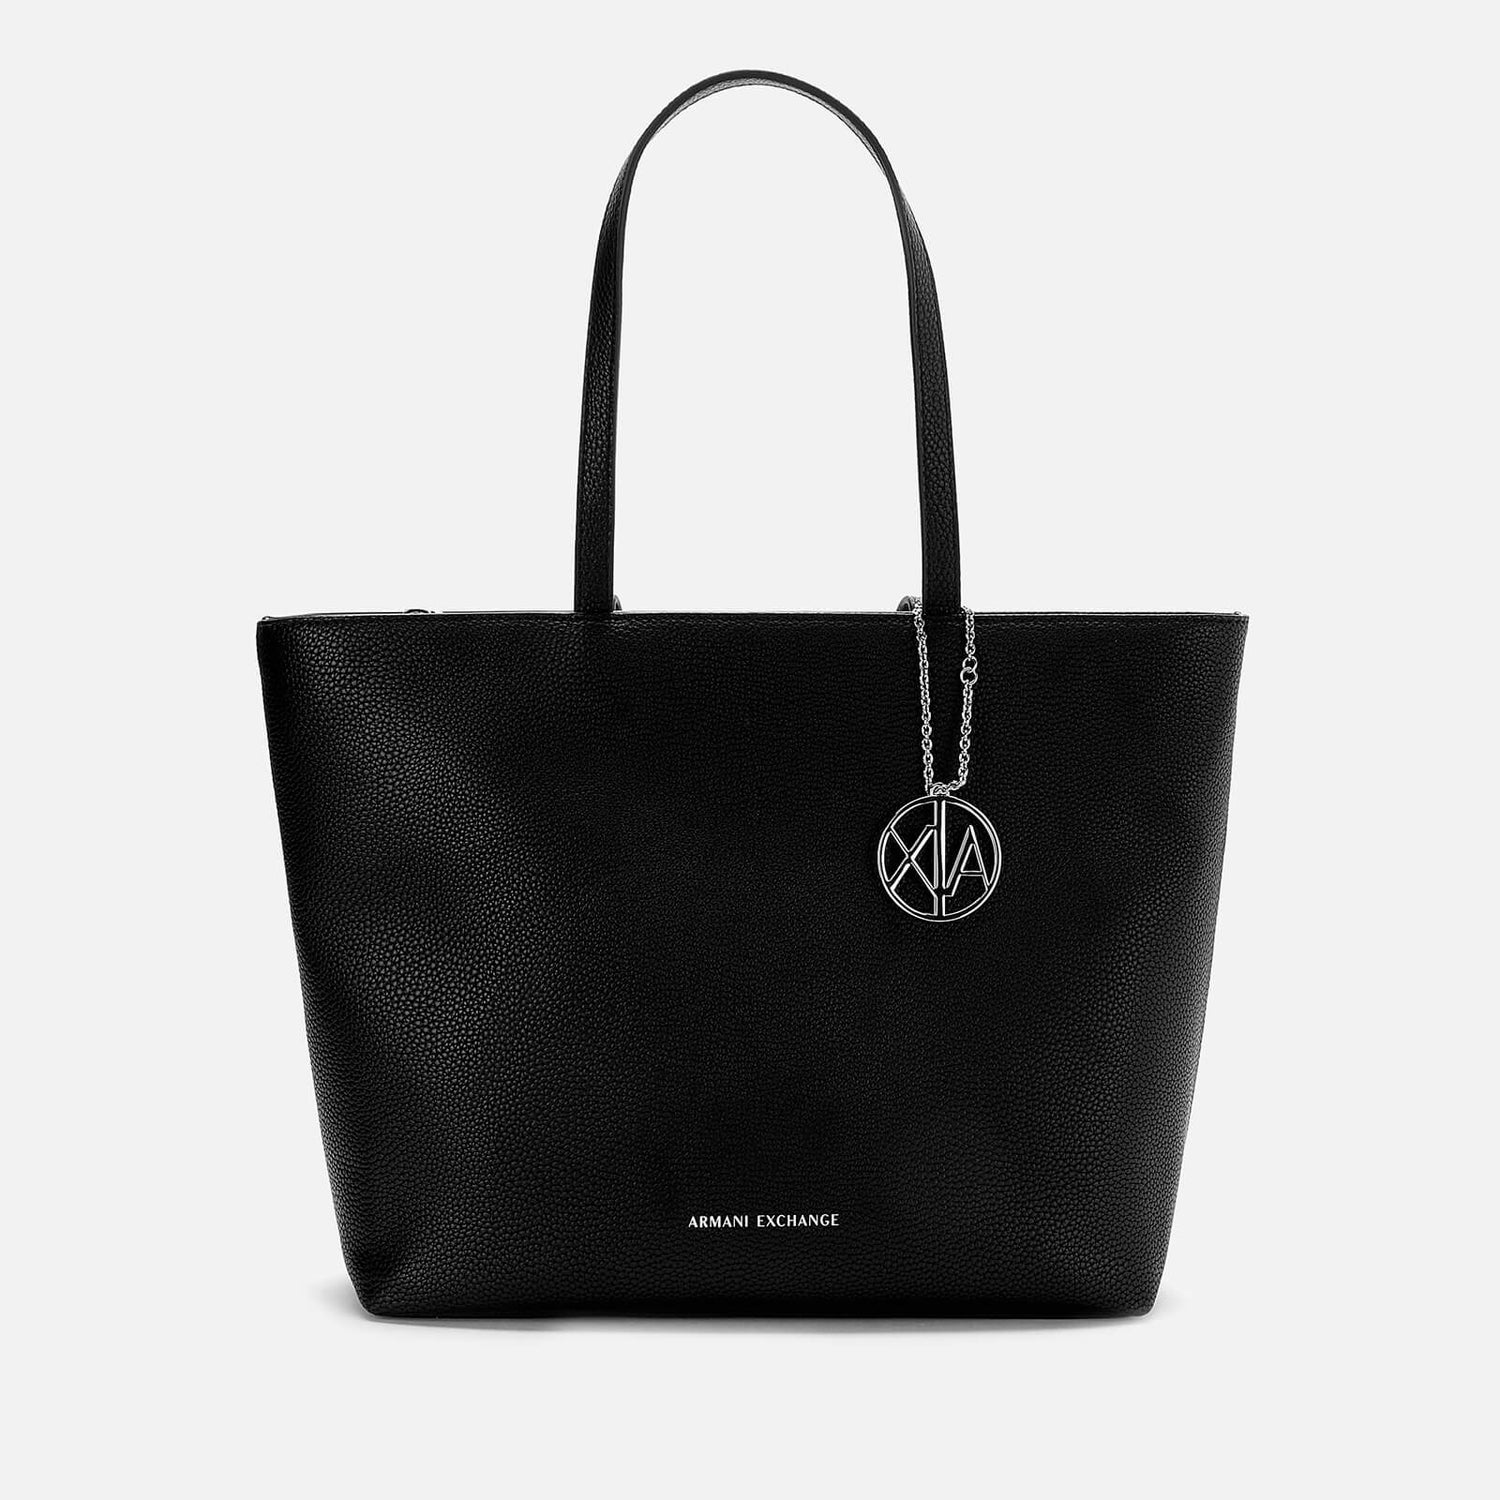 Armani Exchange Women's Angie Zip Top Tote Bag - Black